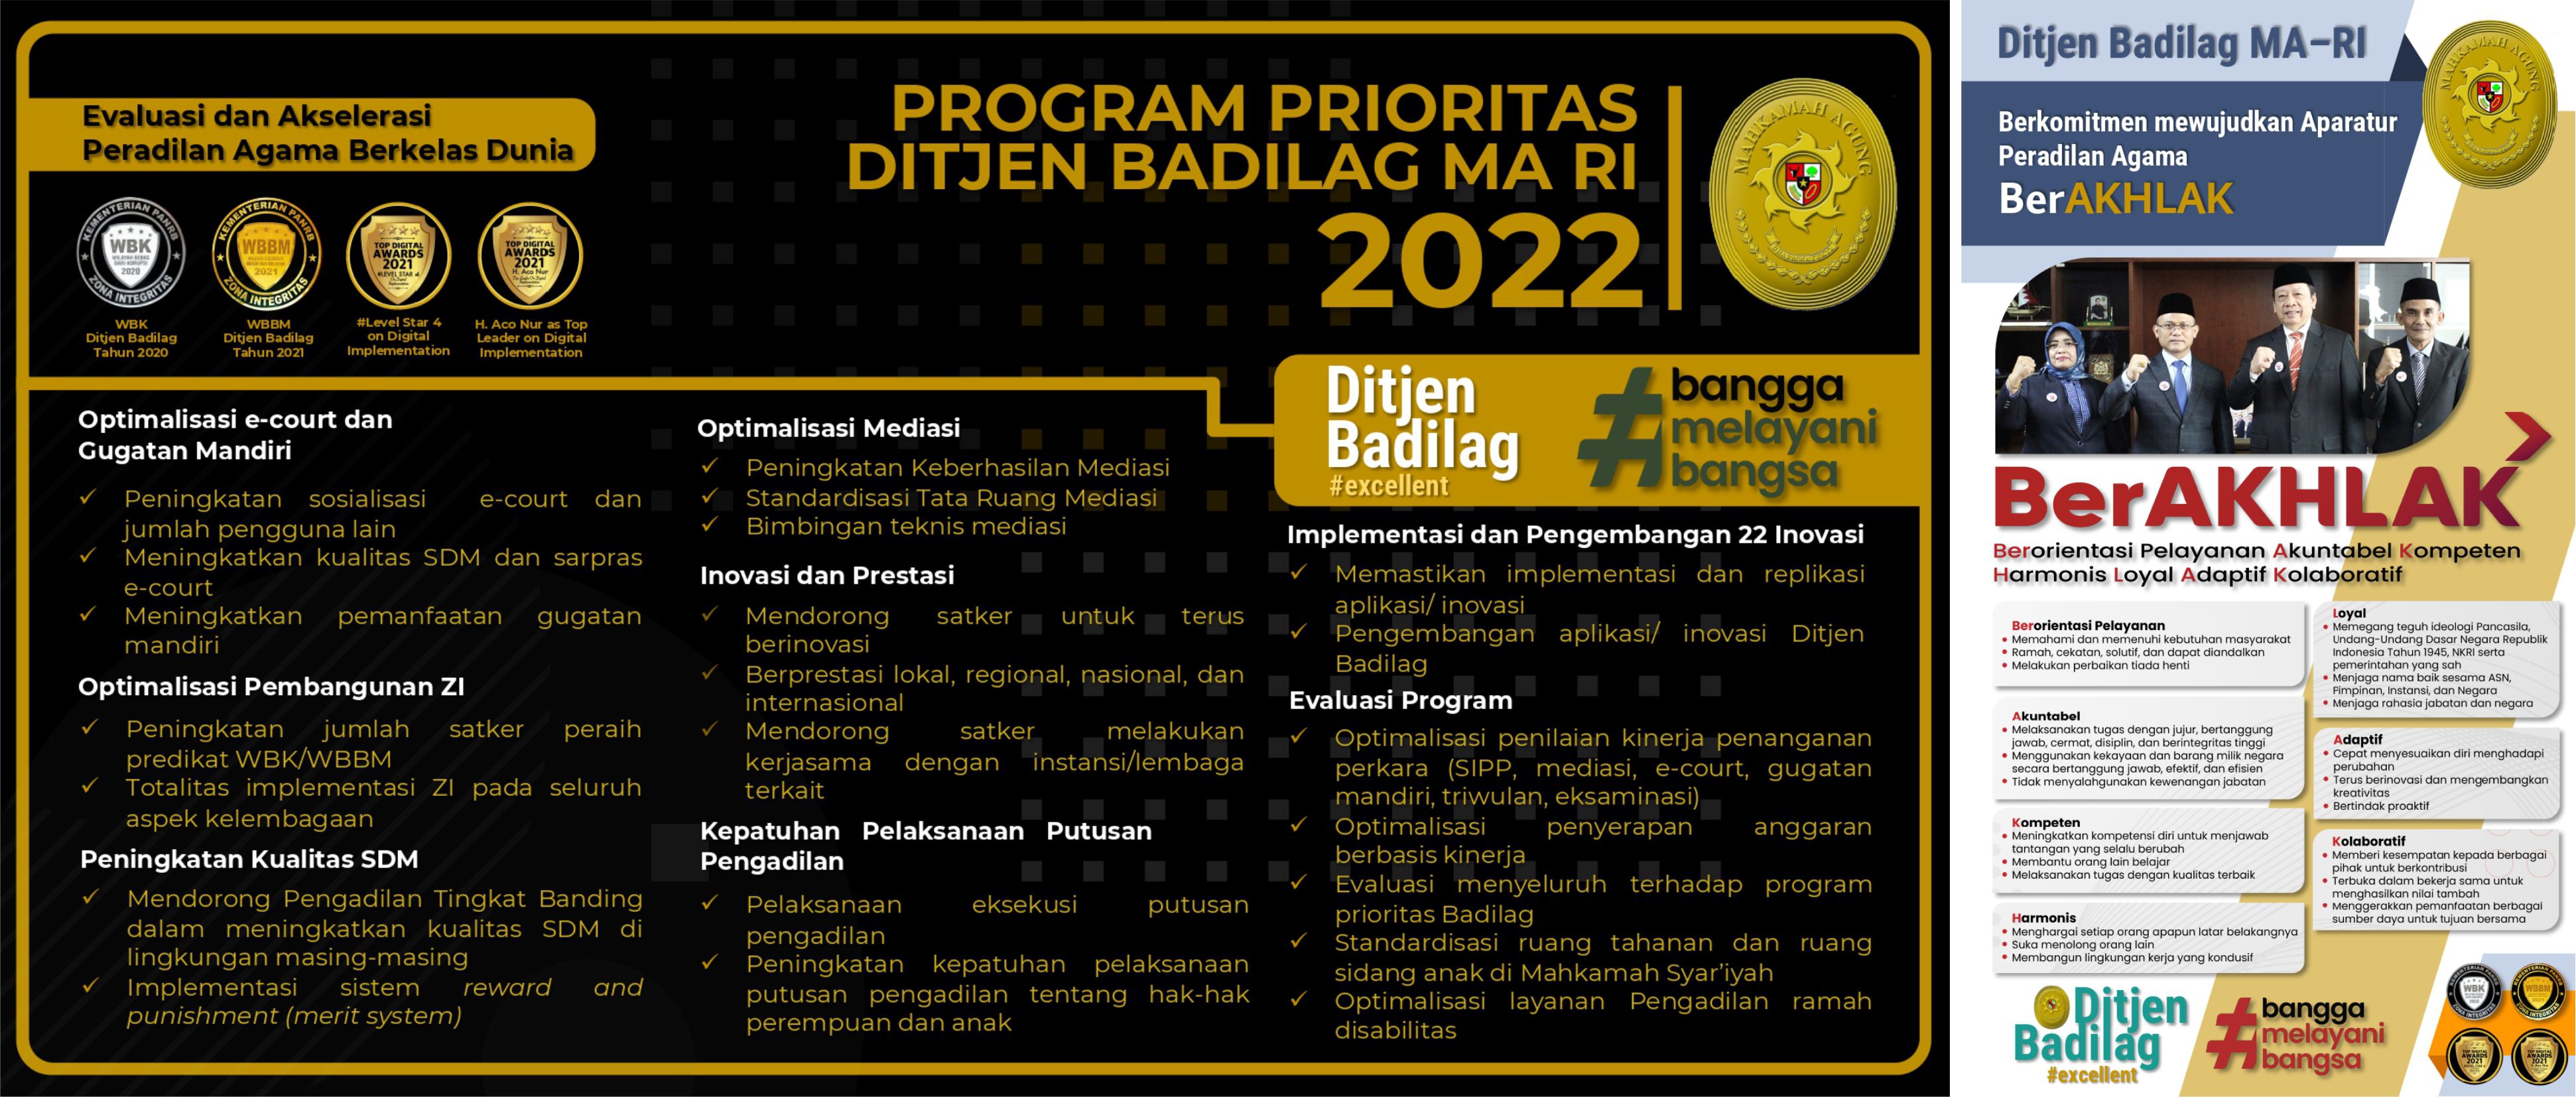 8 (Delapan) program prioritas BADILAG